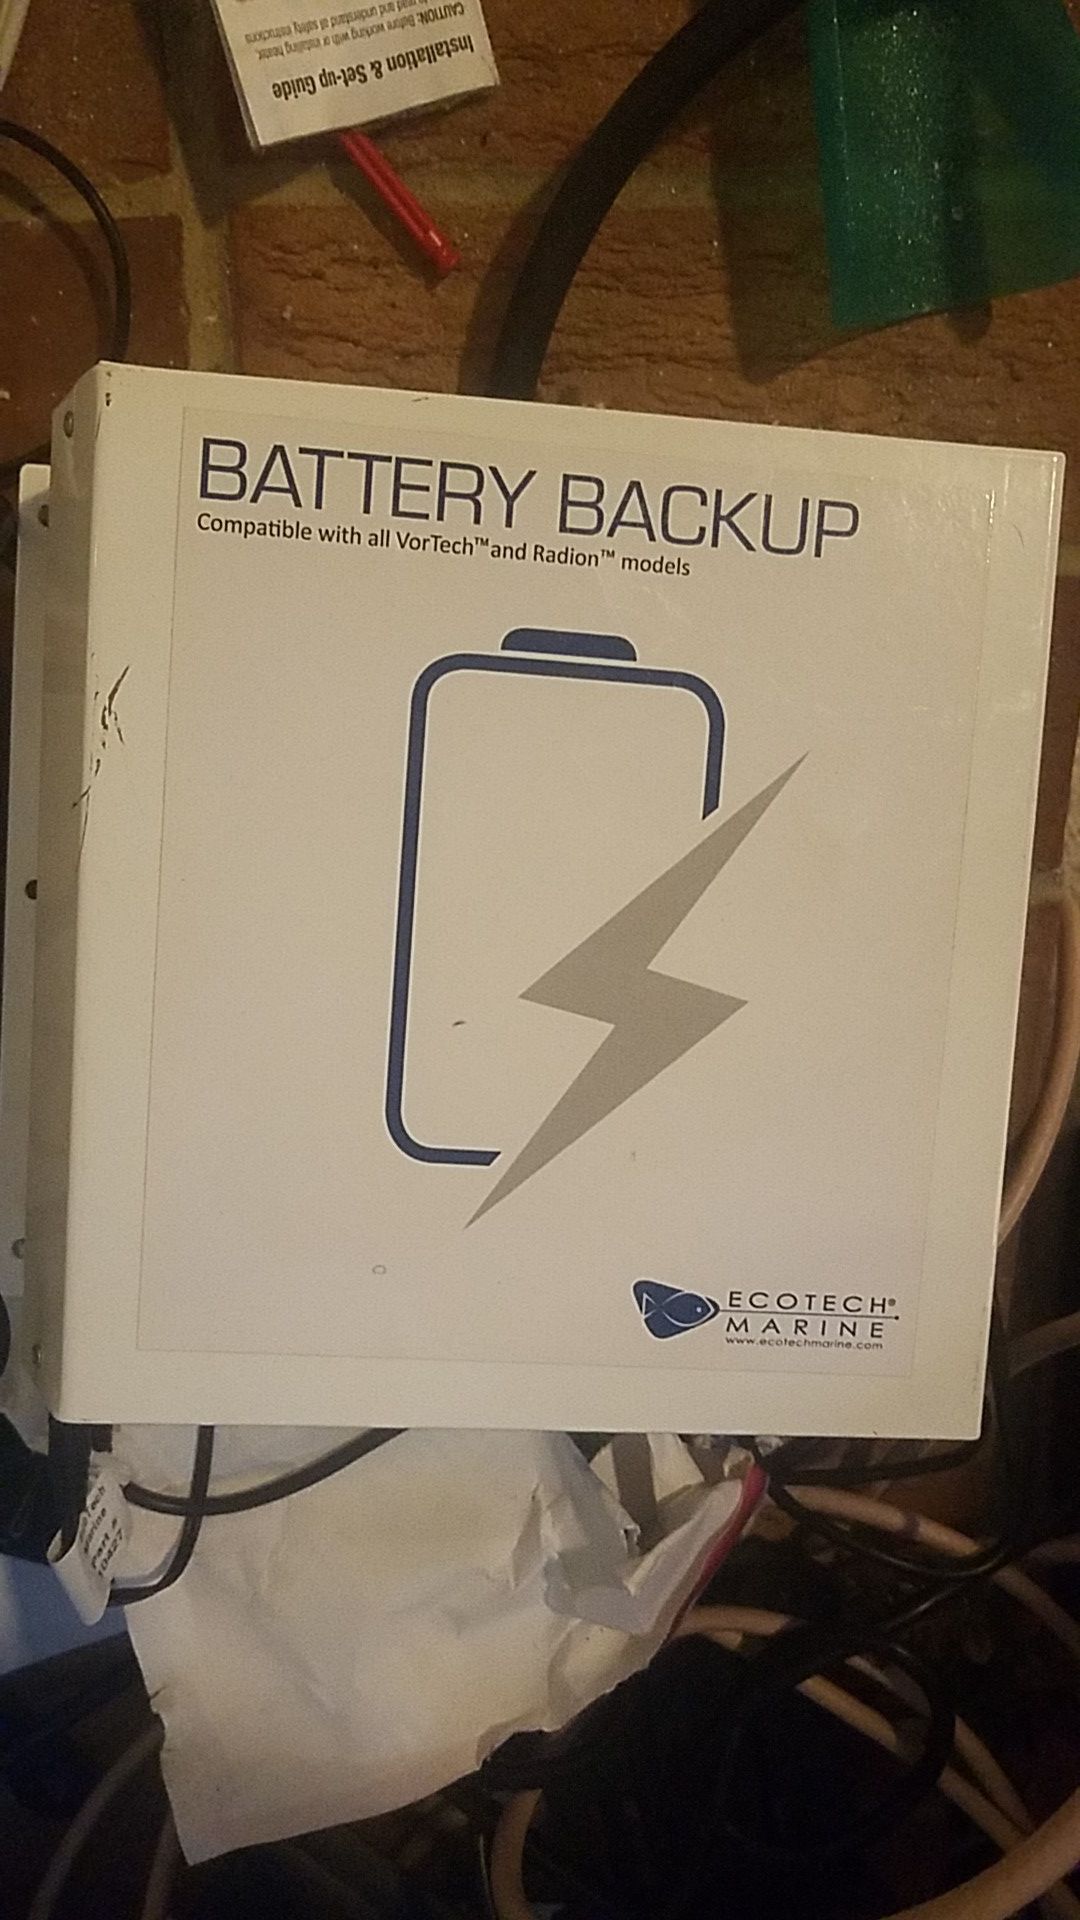 Ecotech battery backup